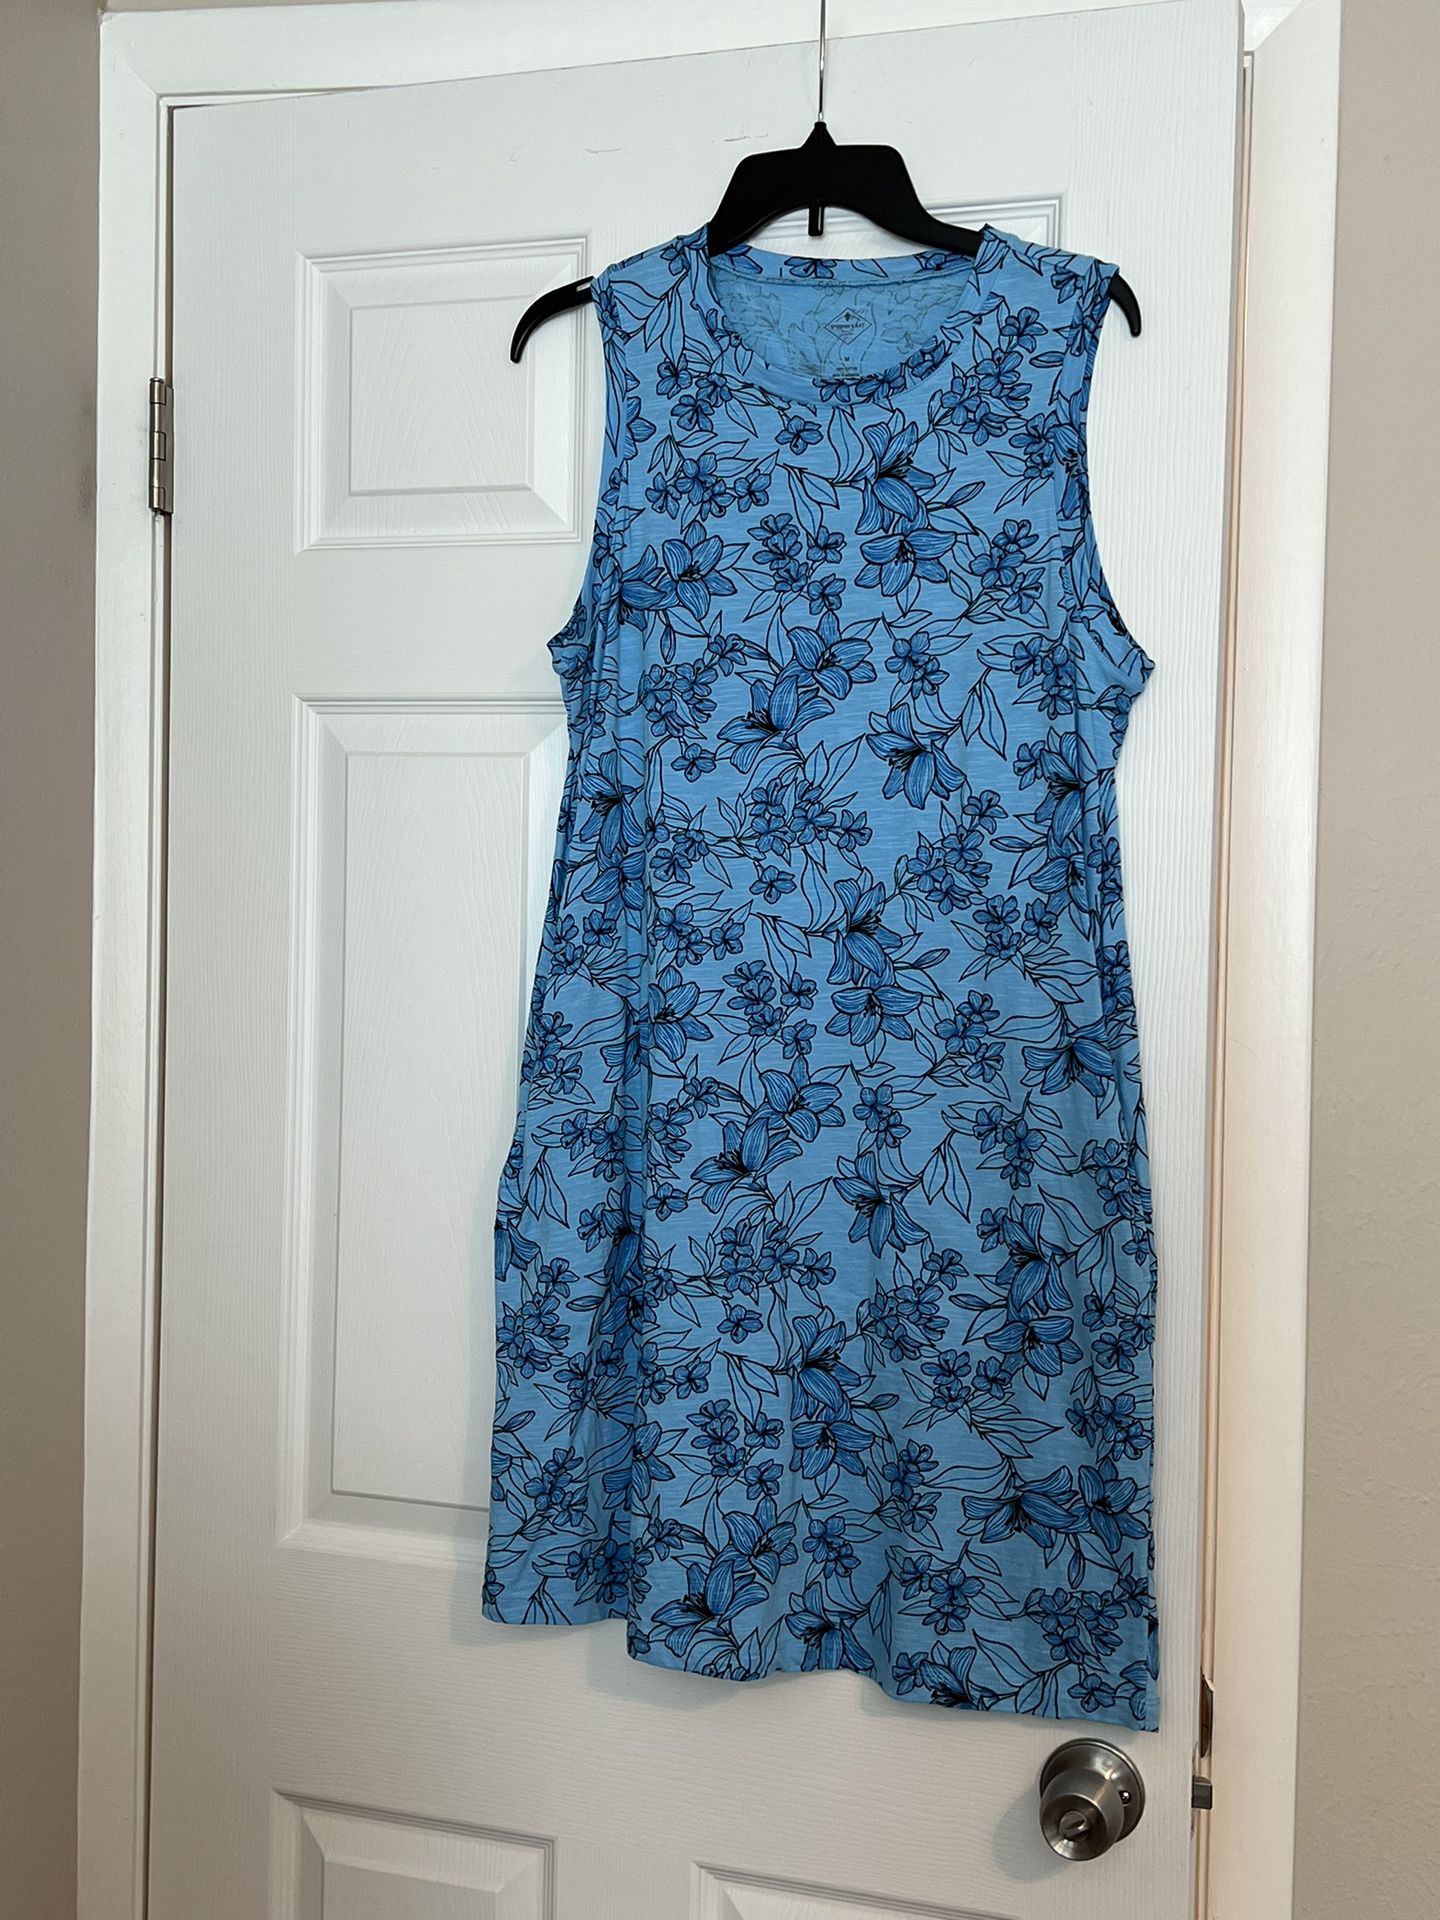 St John’s Bay Blue Floral Cotton Dress 